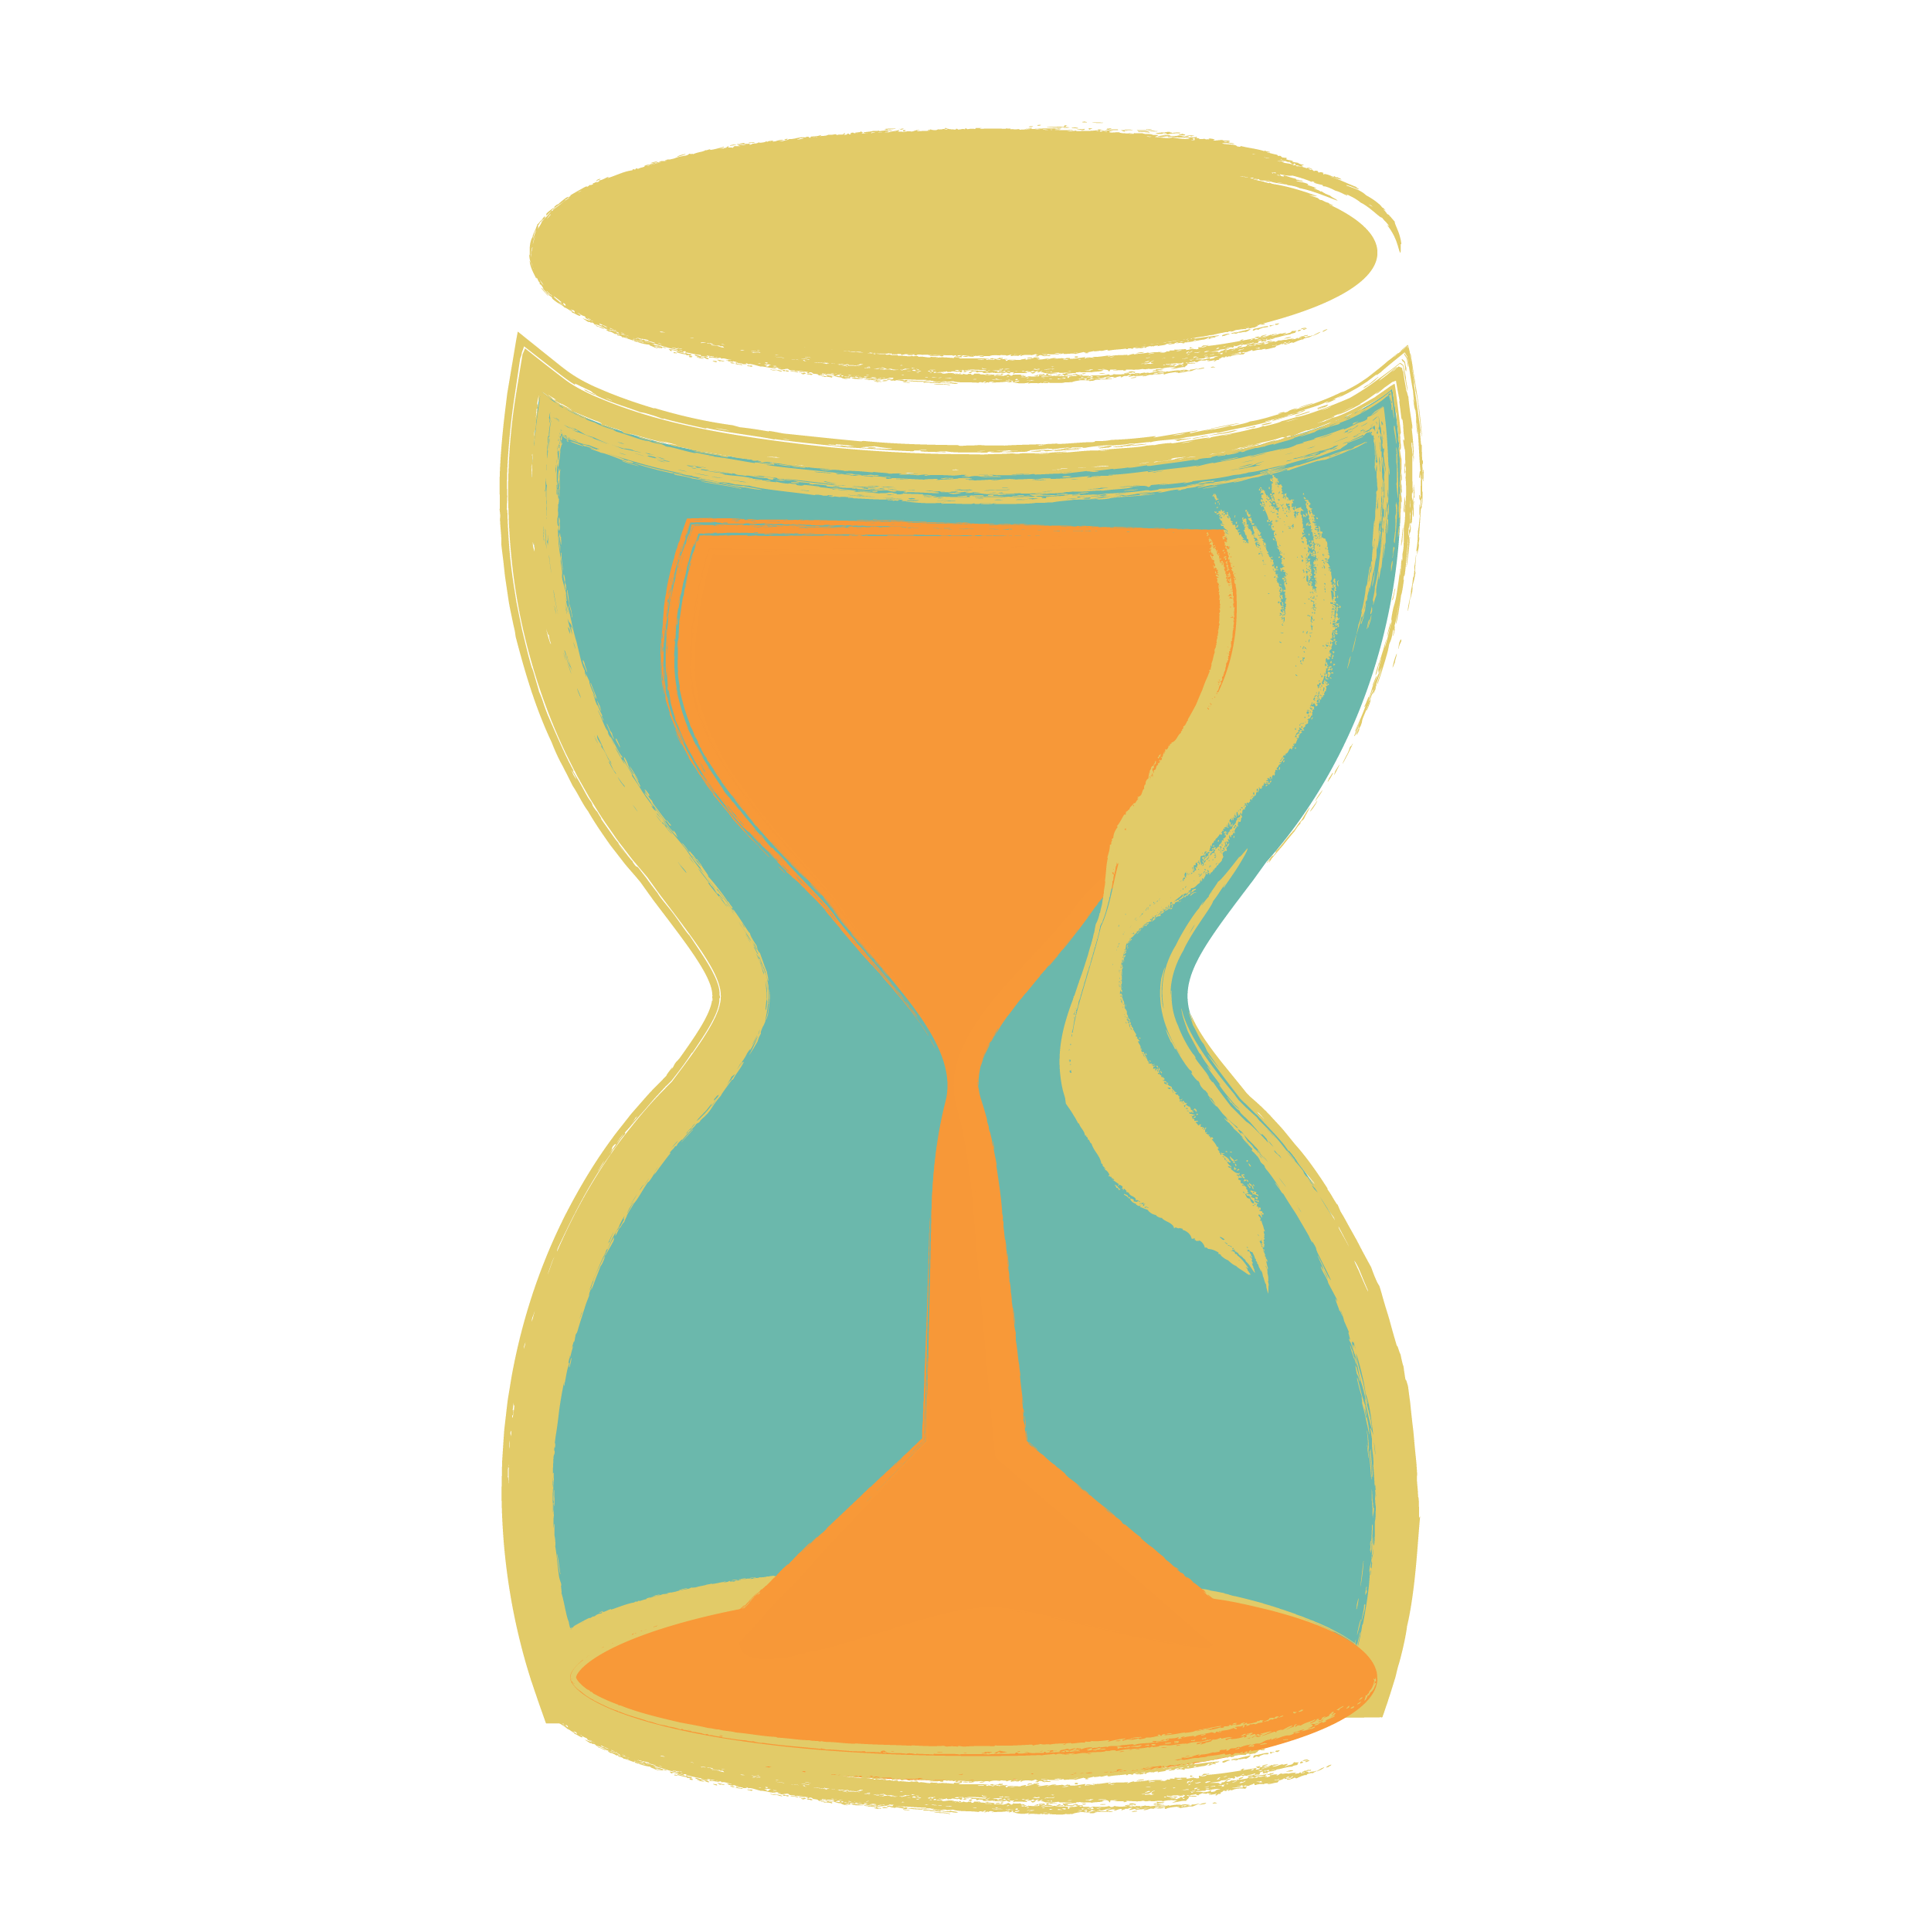 hourglass_icon